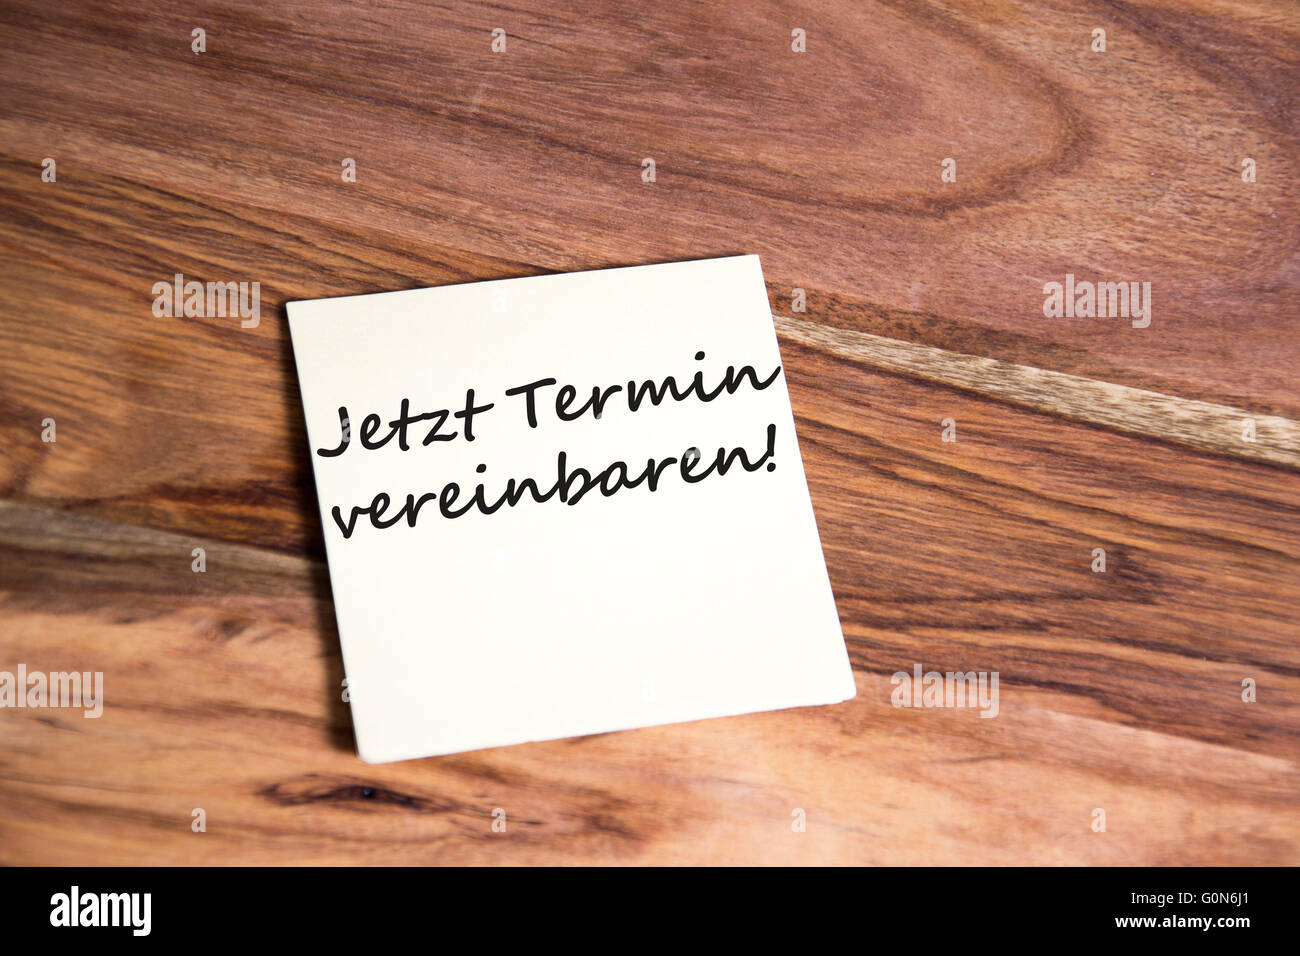 german text Jetzt Termin vereinbaren on post-it Stock Photo